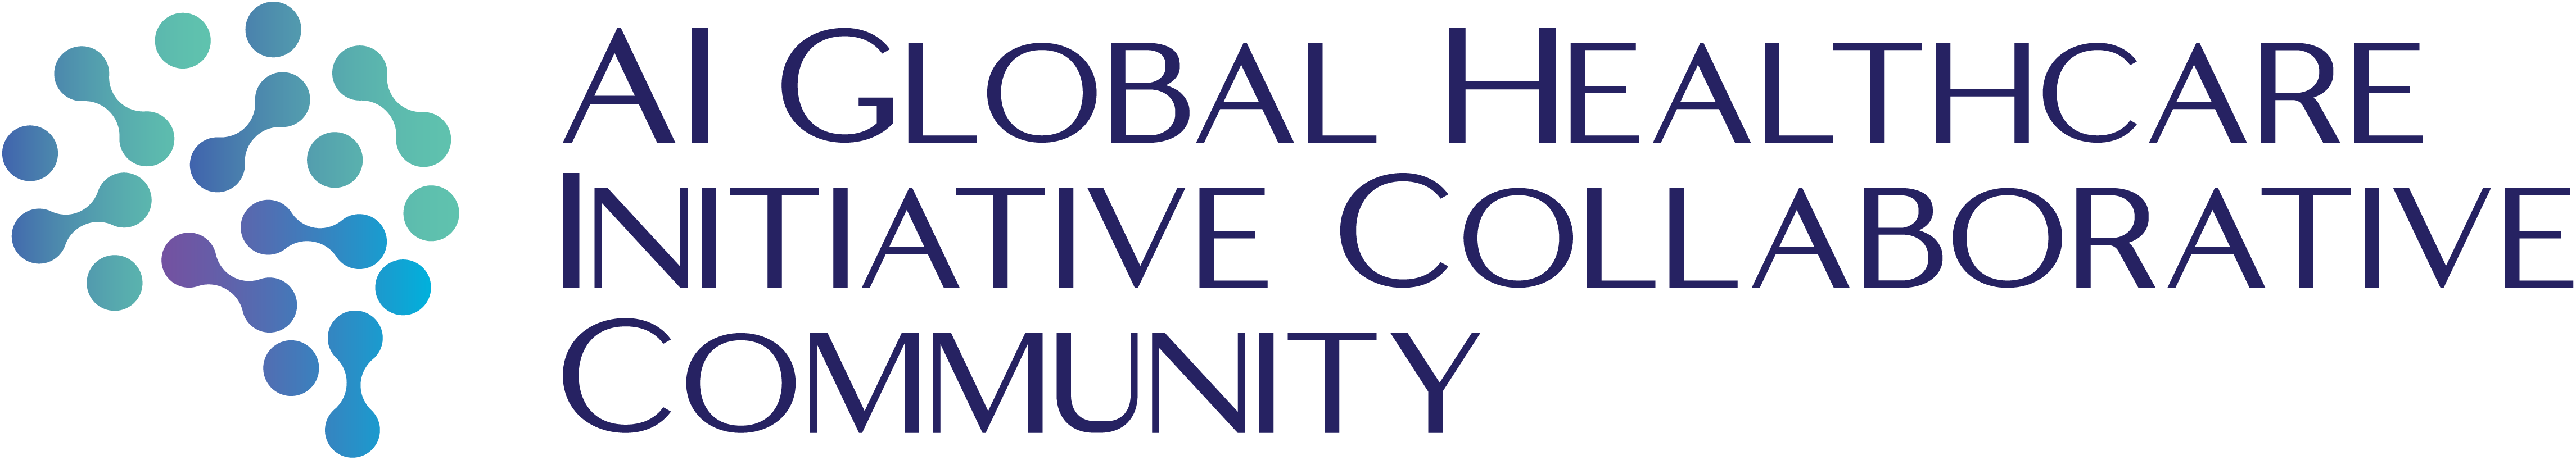 Ai Global Healthcare Initiative Collaborative Community Logo Fullcolor